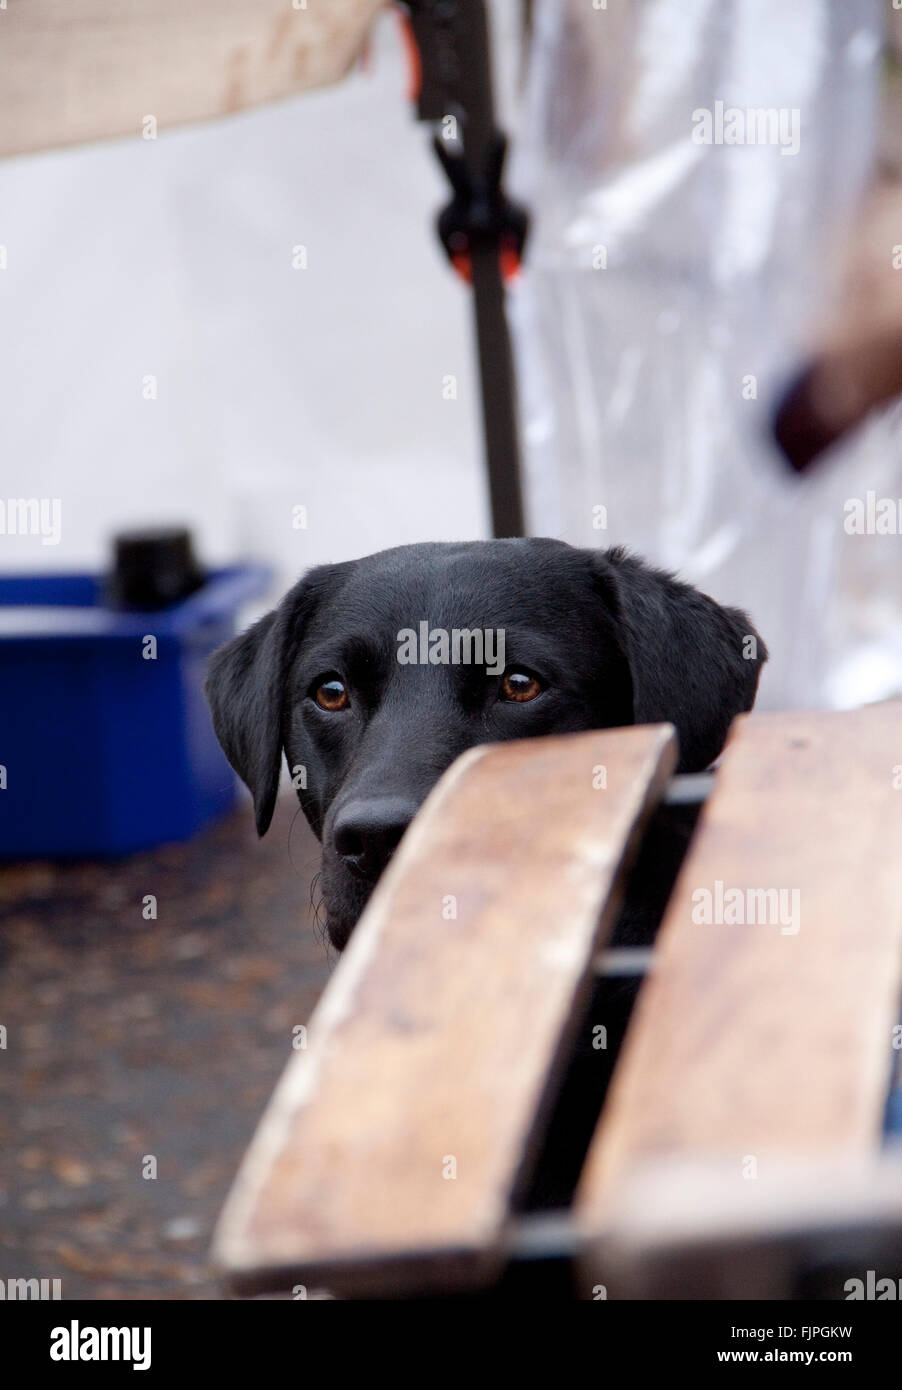 Black Labrador dog looks round a wooden bench Stock Photo